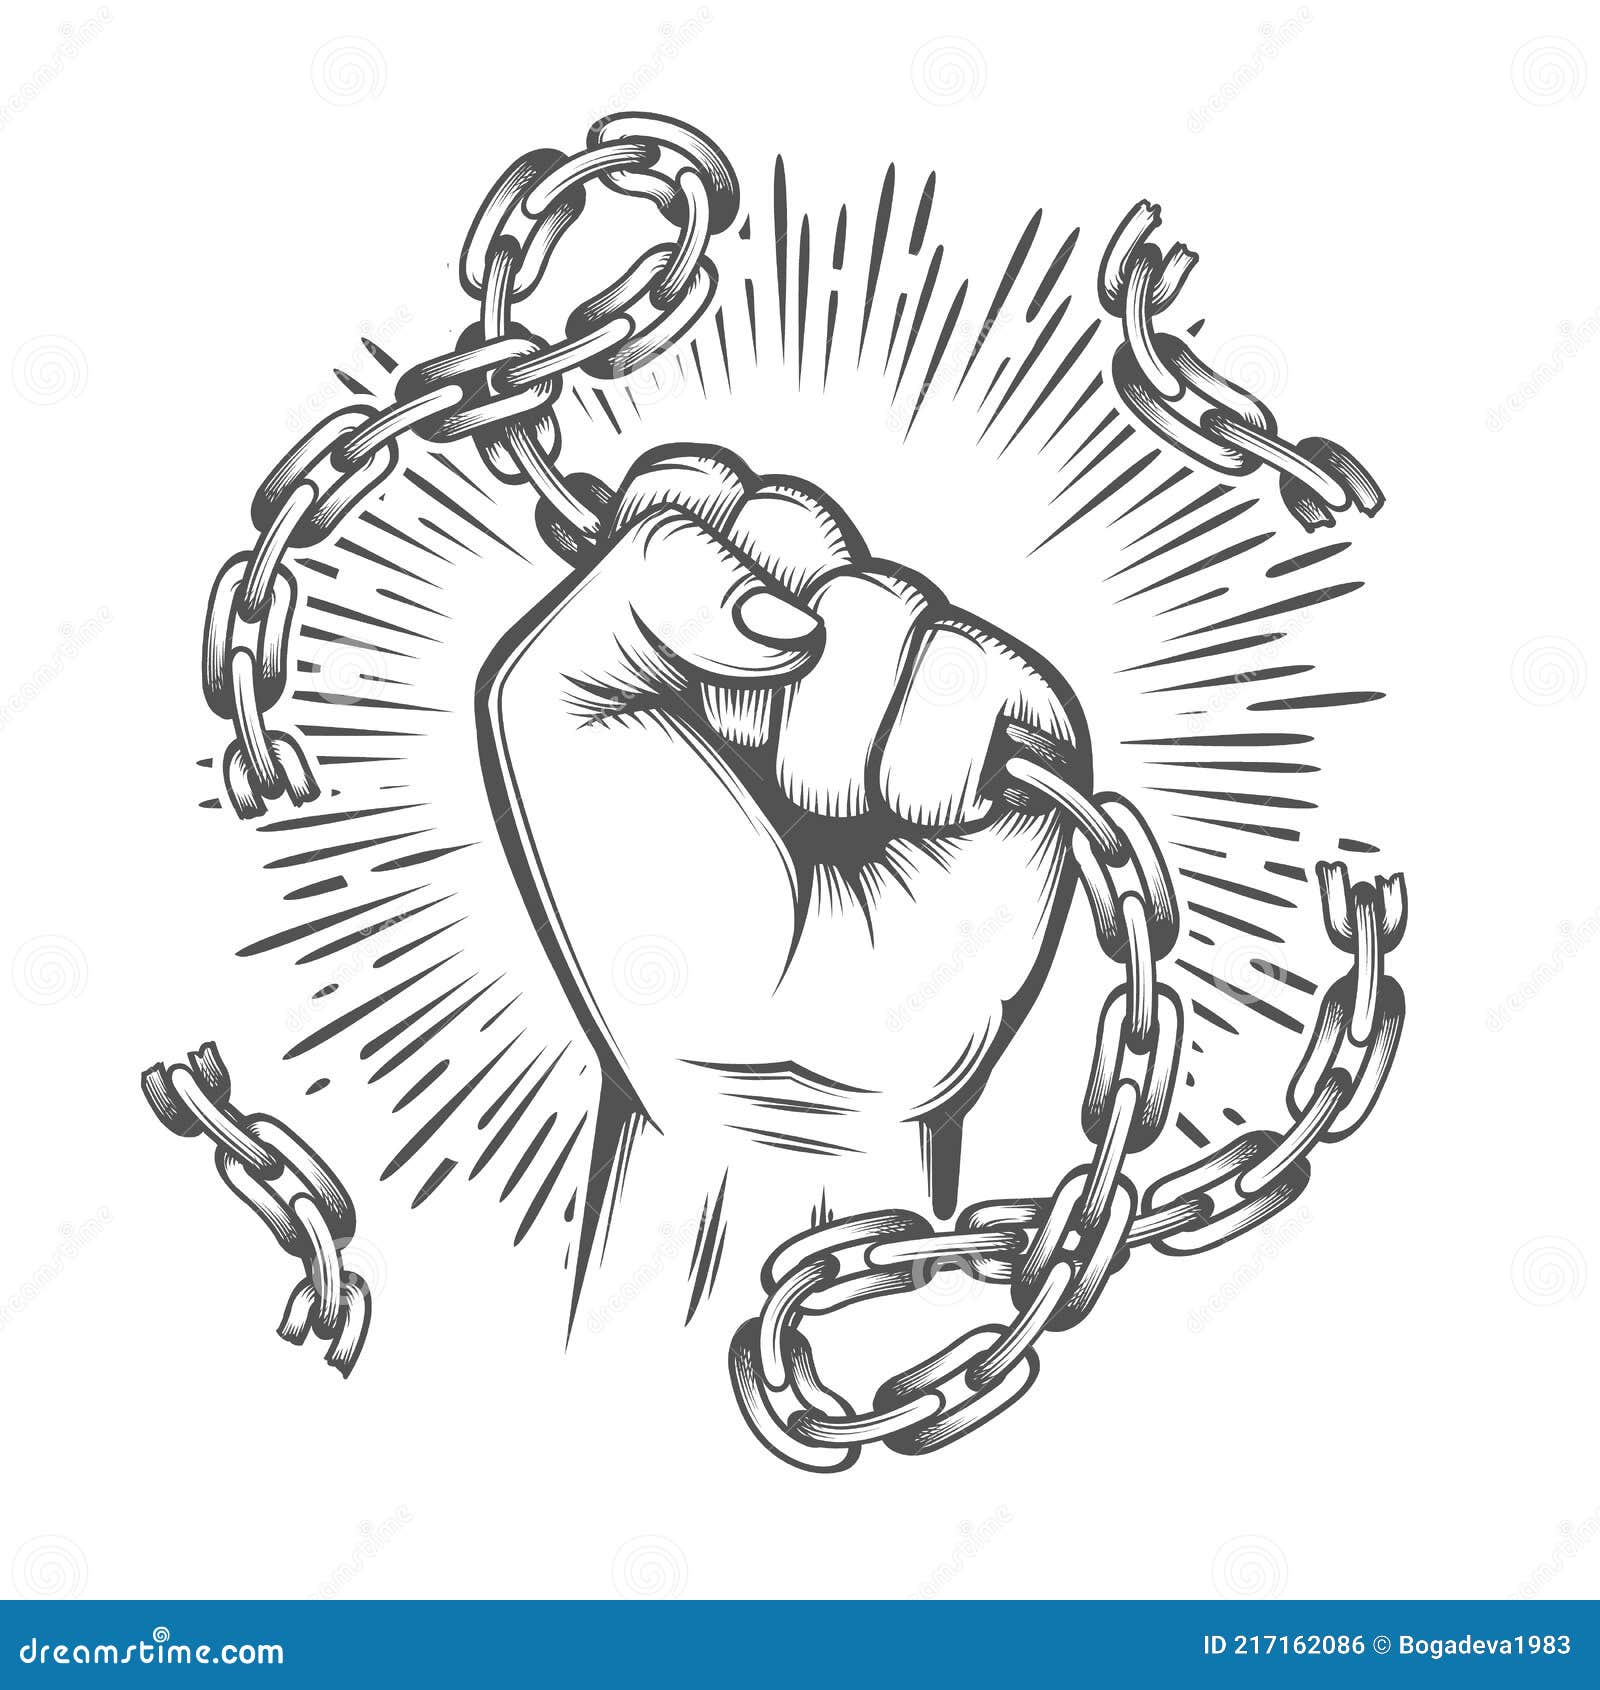 Human Fist with Broken Chain Tattoo Stock Vector - Illustration of human,  african: 217162086